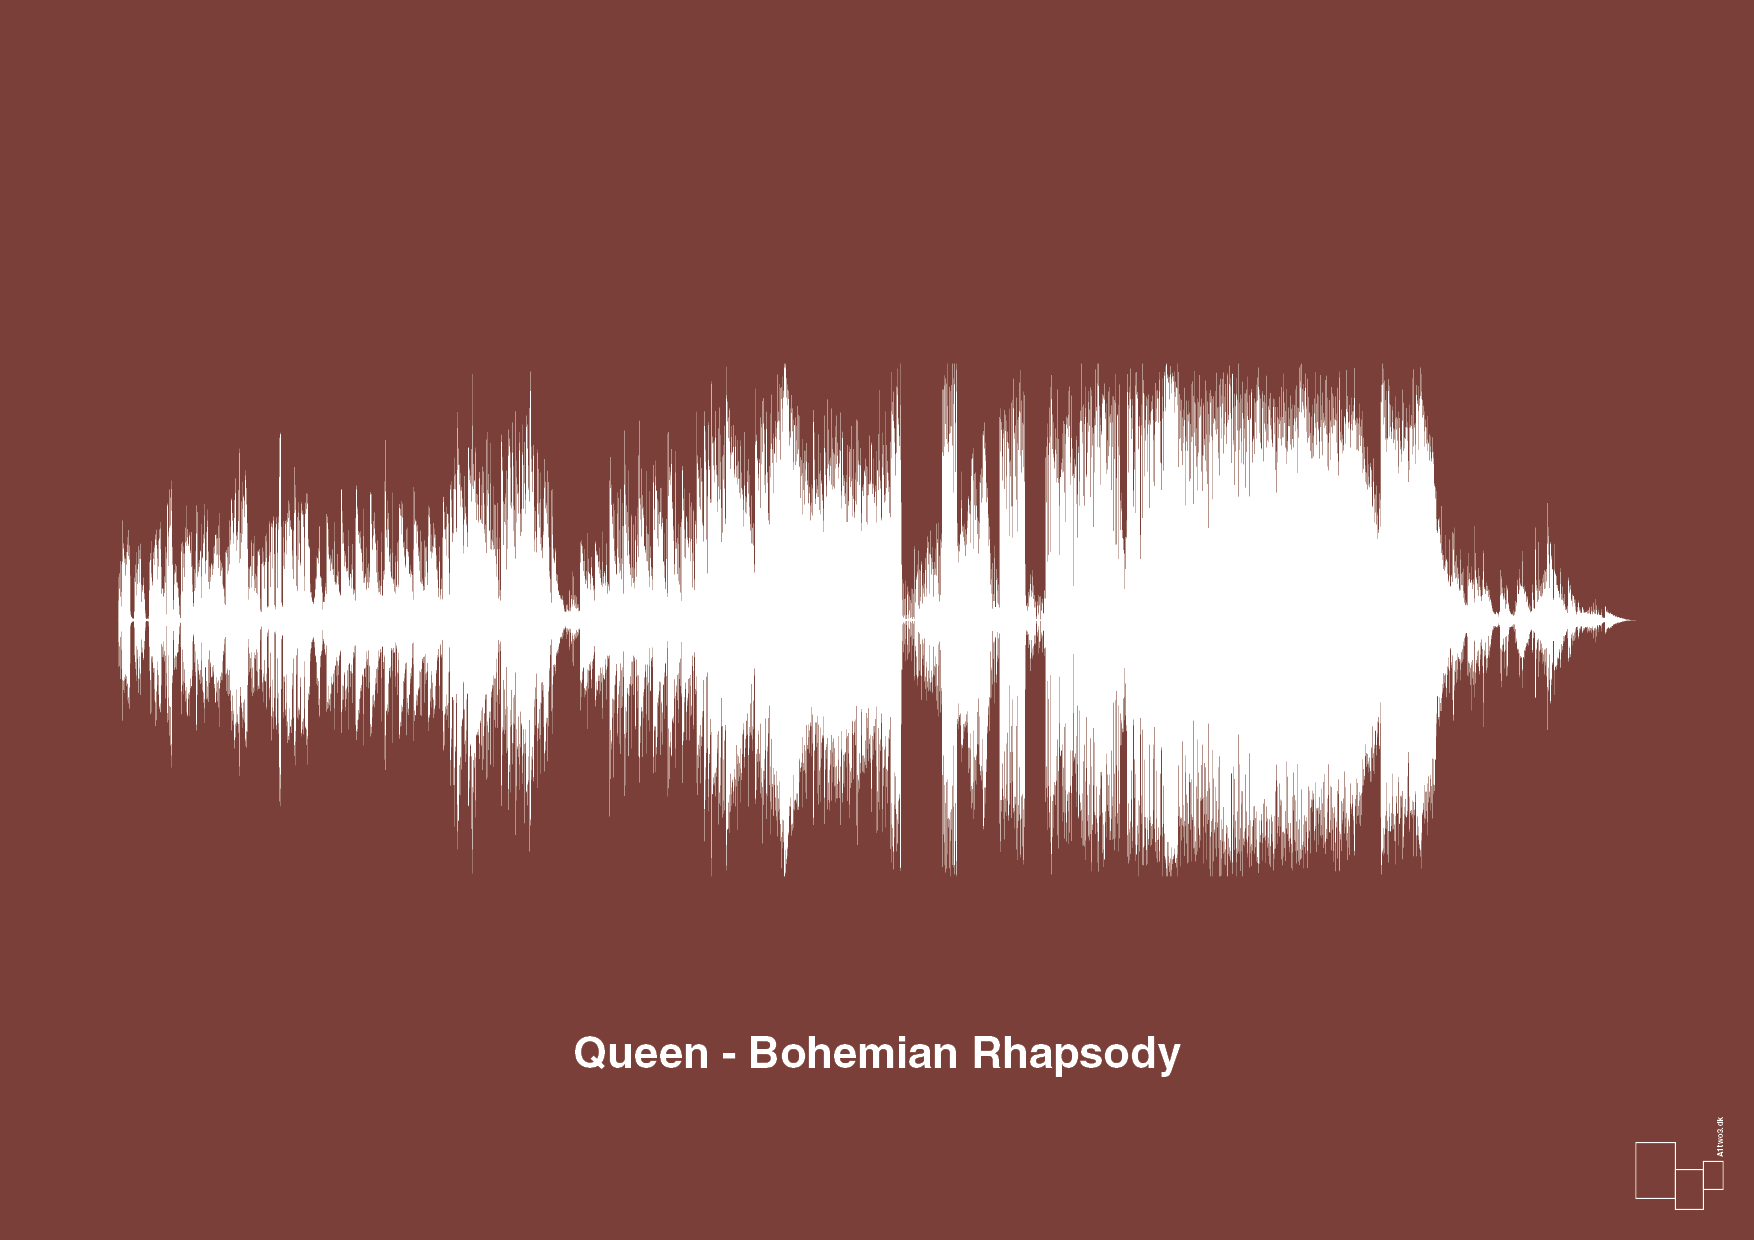 queen - bohemian rhapsody - Plakat med Musik i Red Pepper